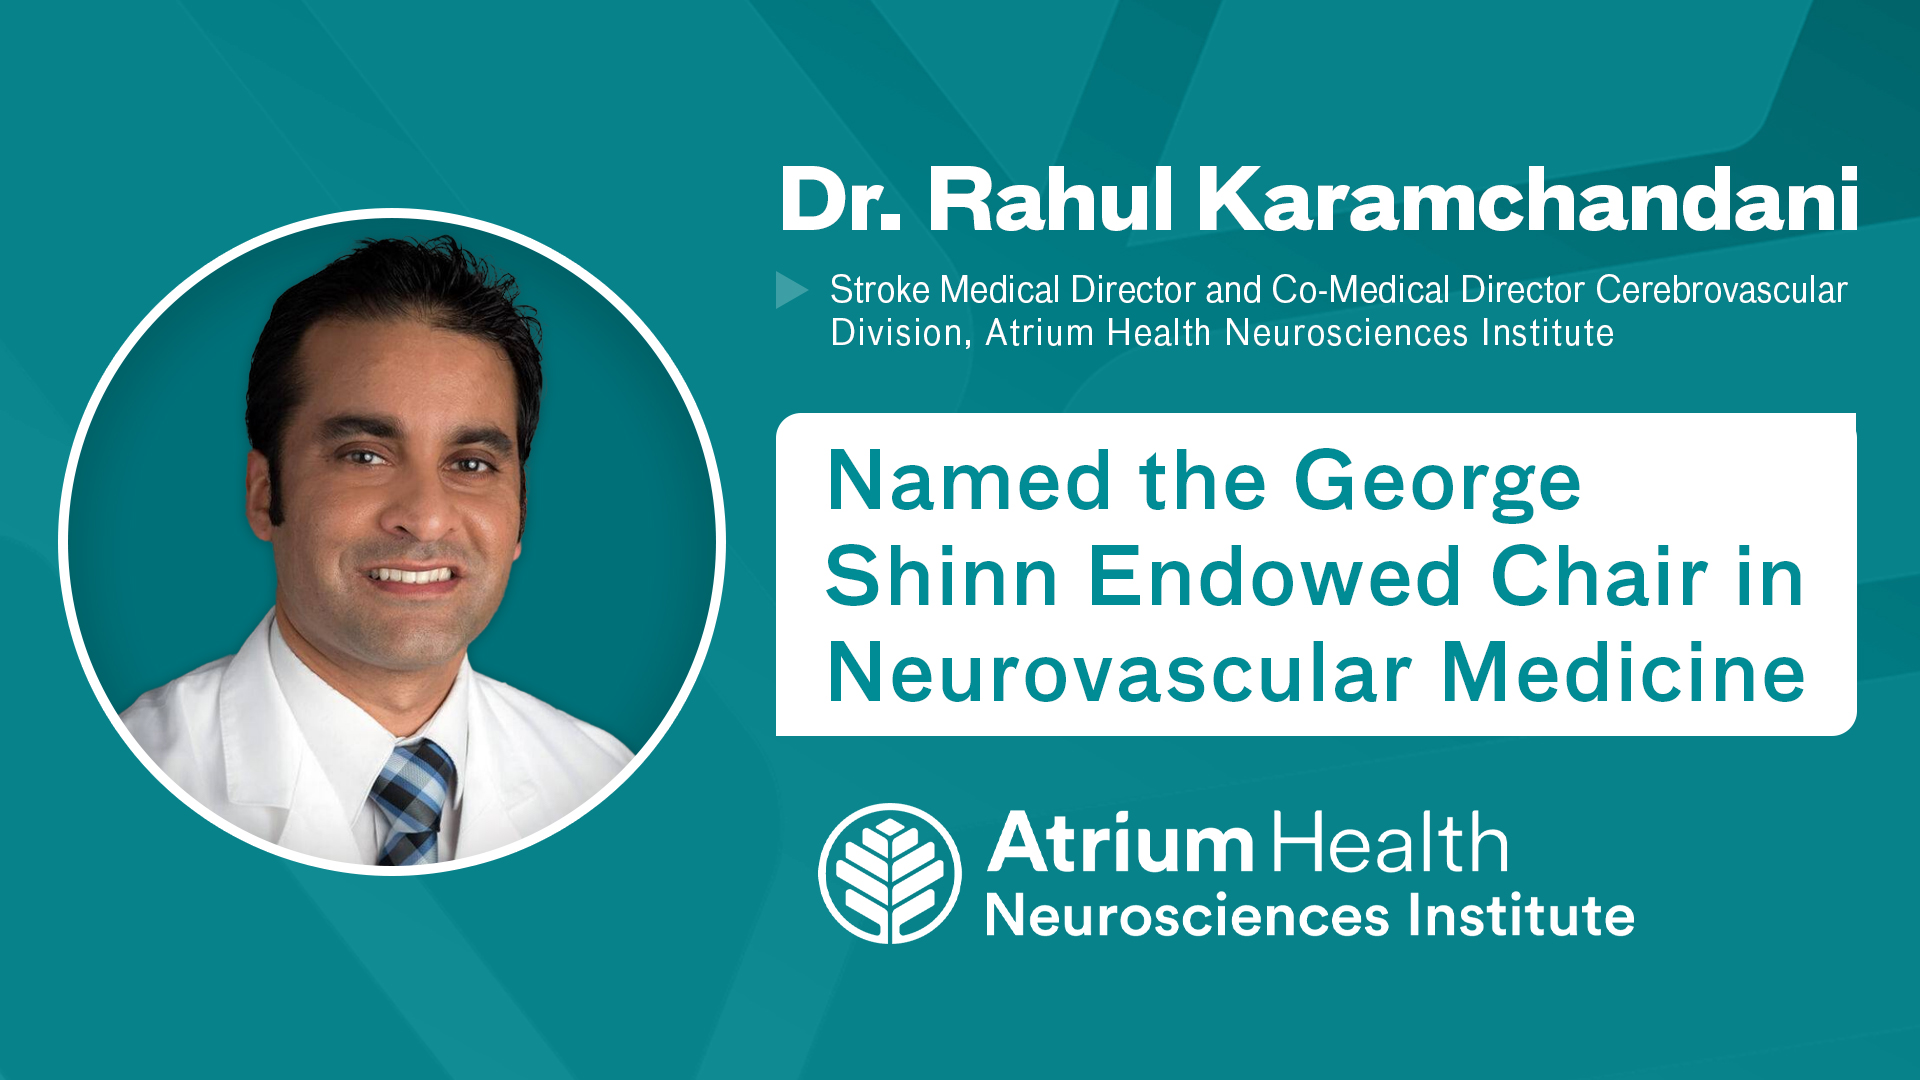 Dr. Rahul Karamchandani named George Shinn Endowed Chair of Neurovascular Medicine 